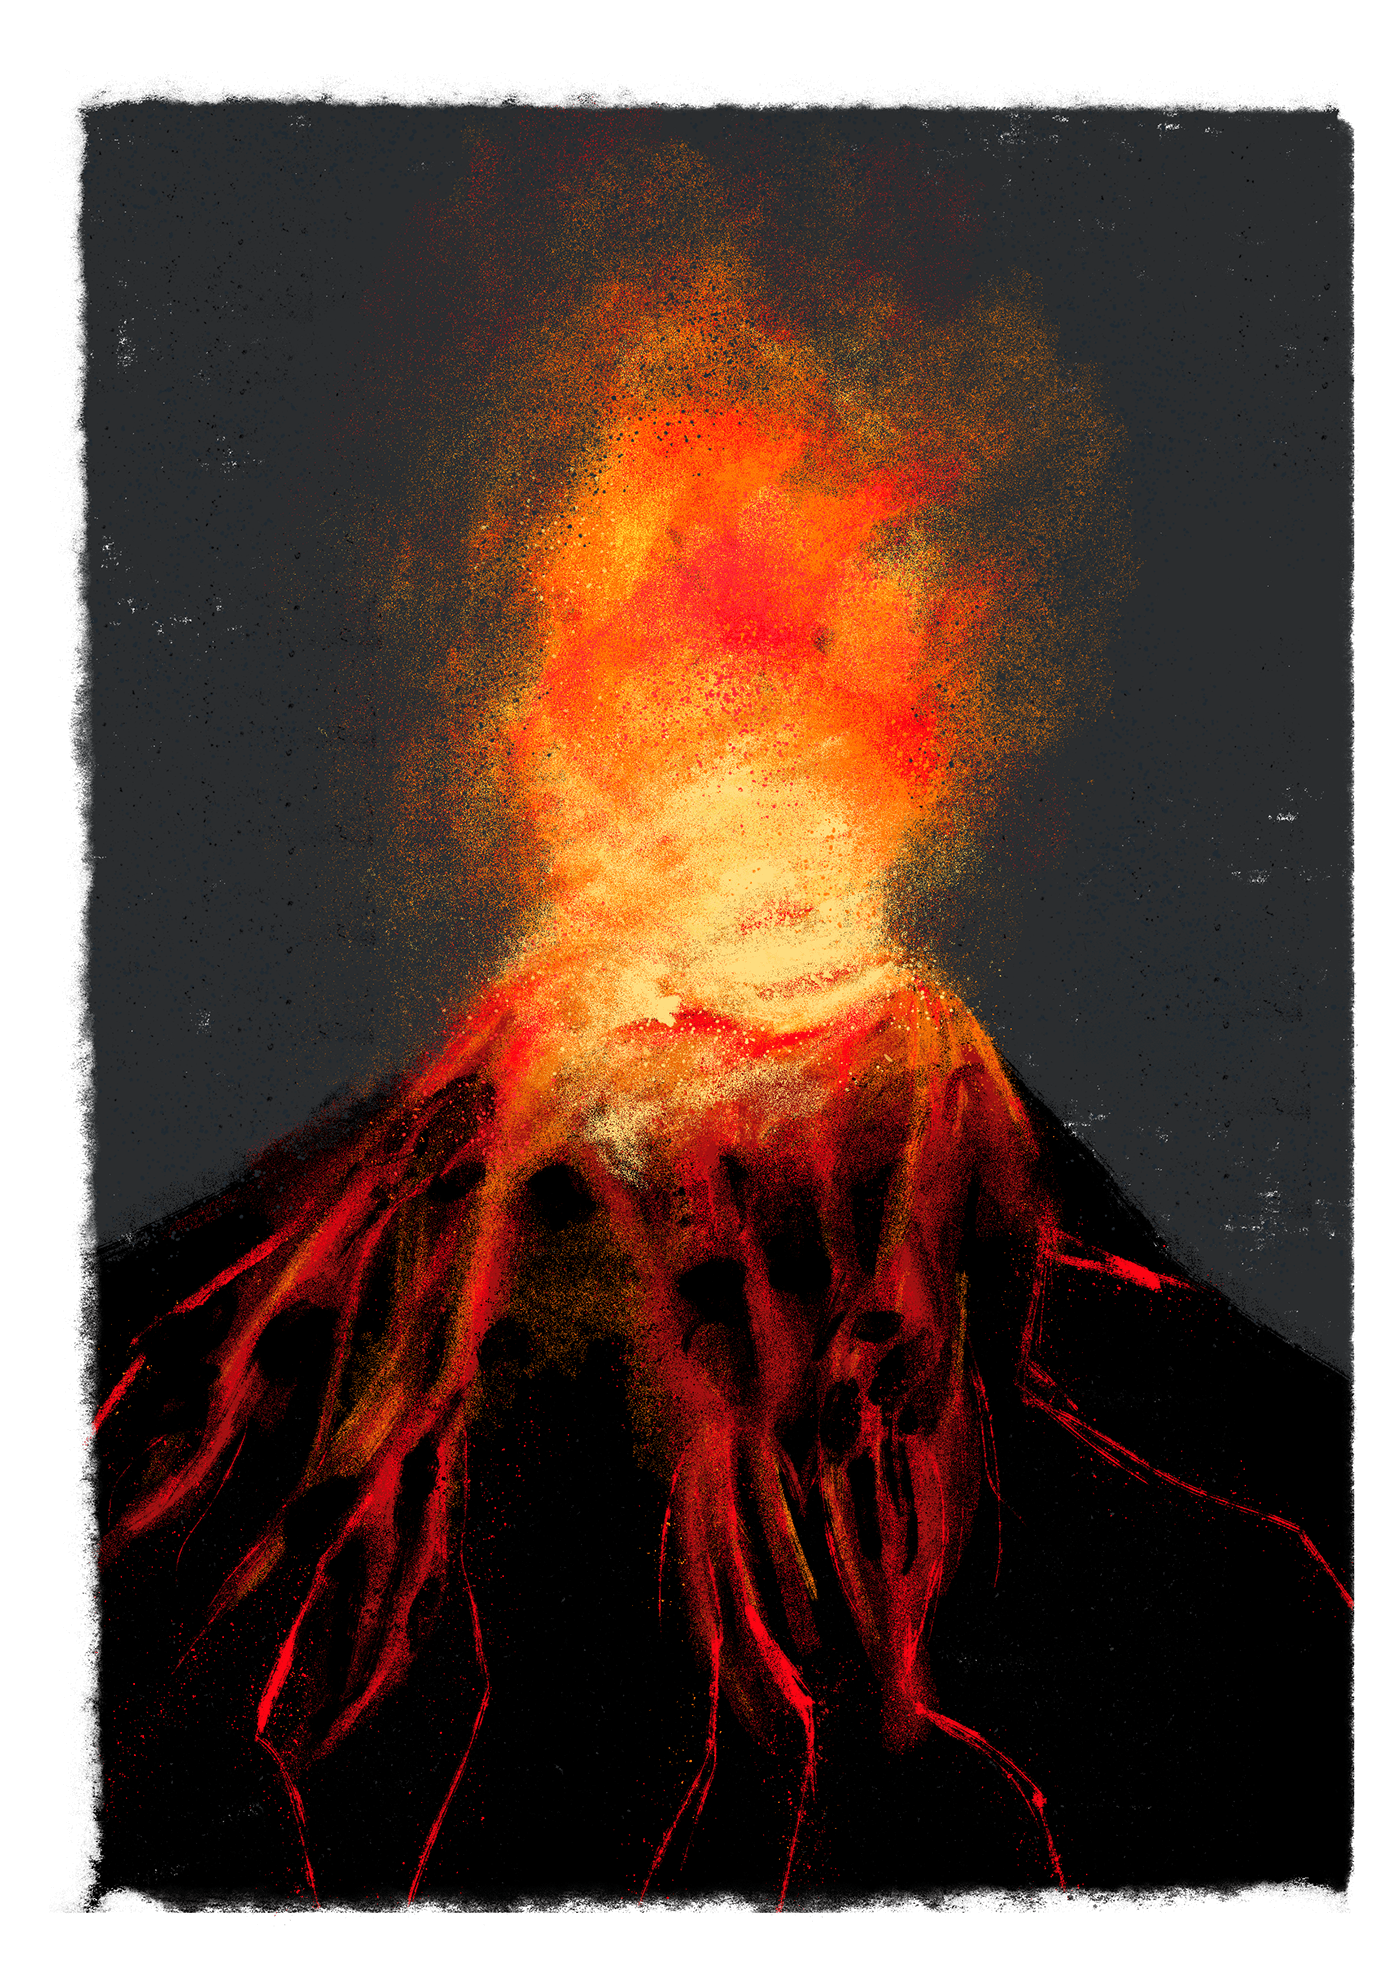 Illustration from a volcano eruption